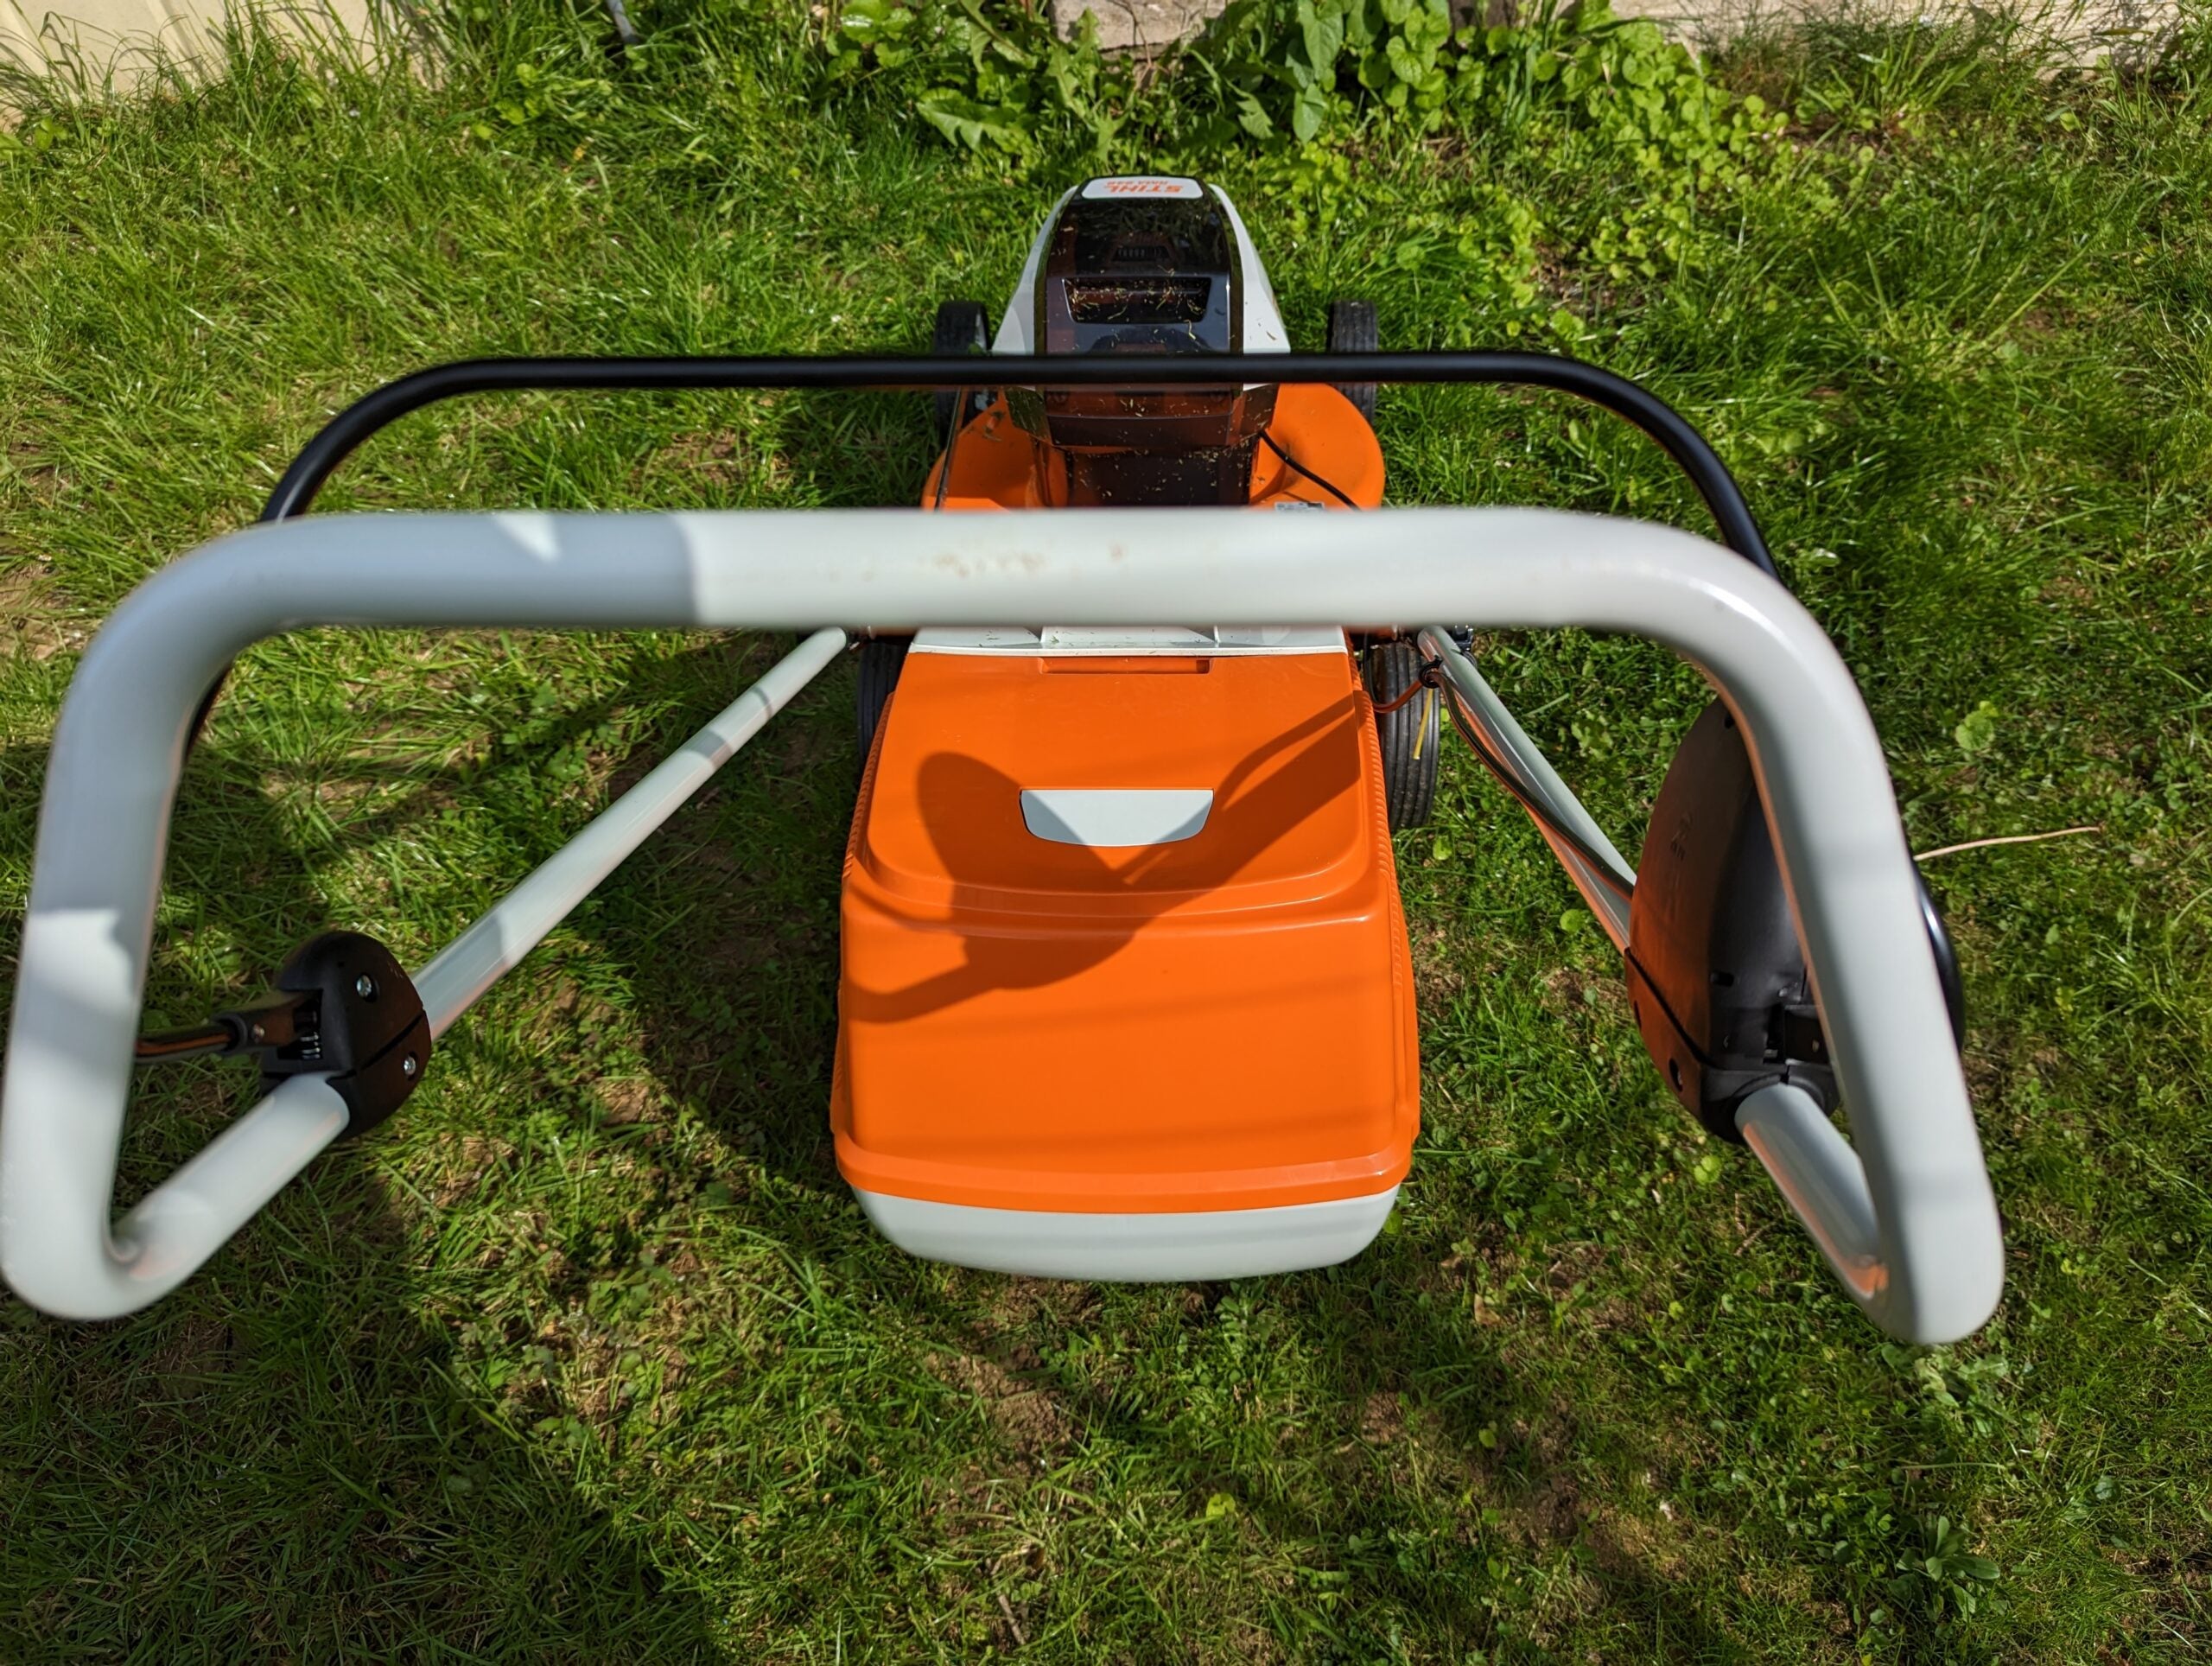 Stihl RMA 248 Cordless Lawn Mower top down